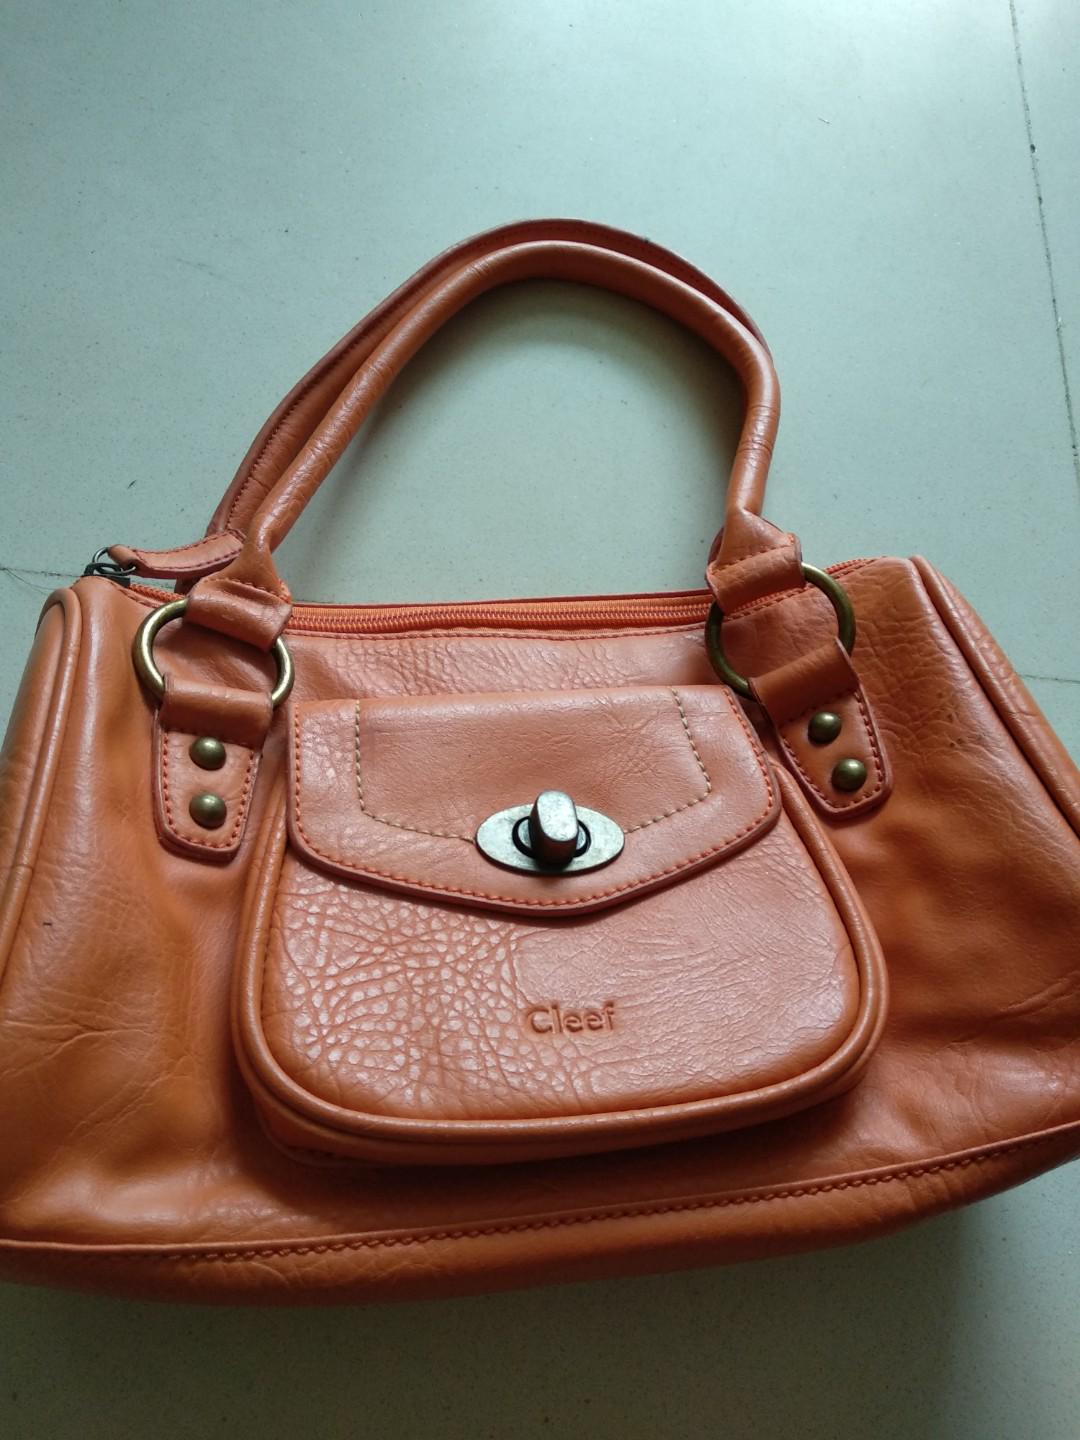 Cleef handbag freee, Women's Fashion 